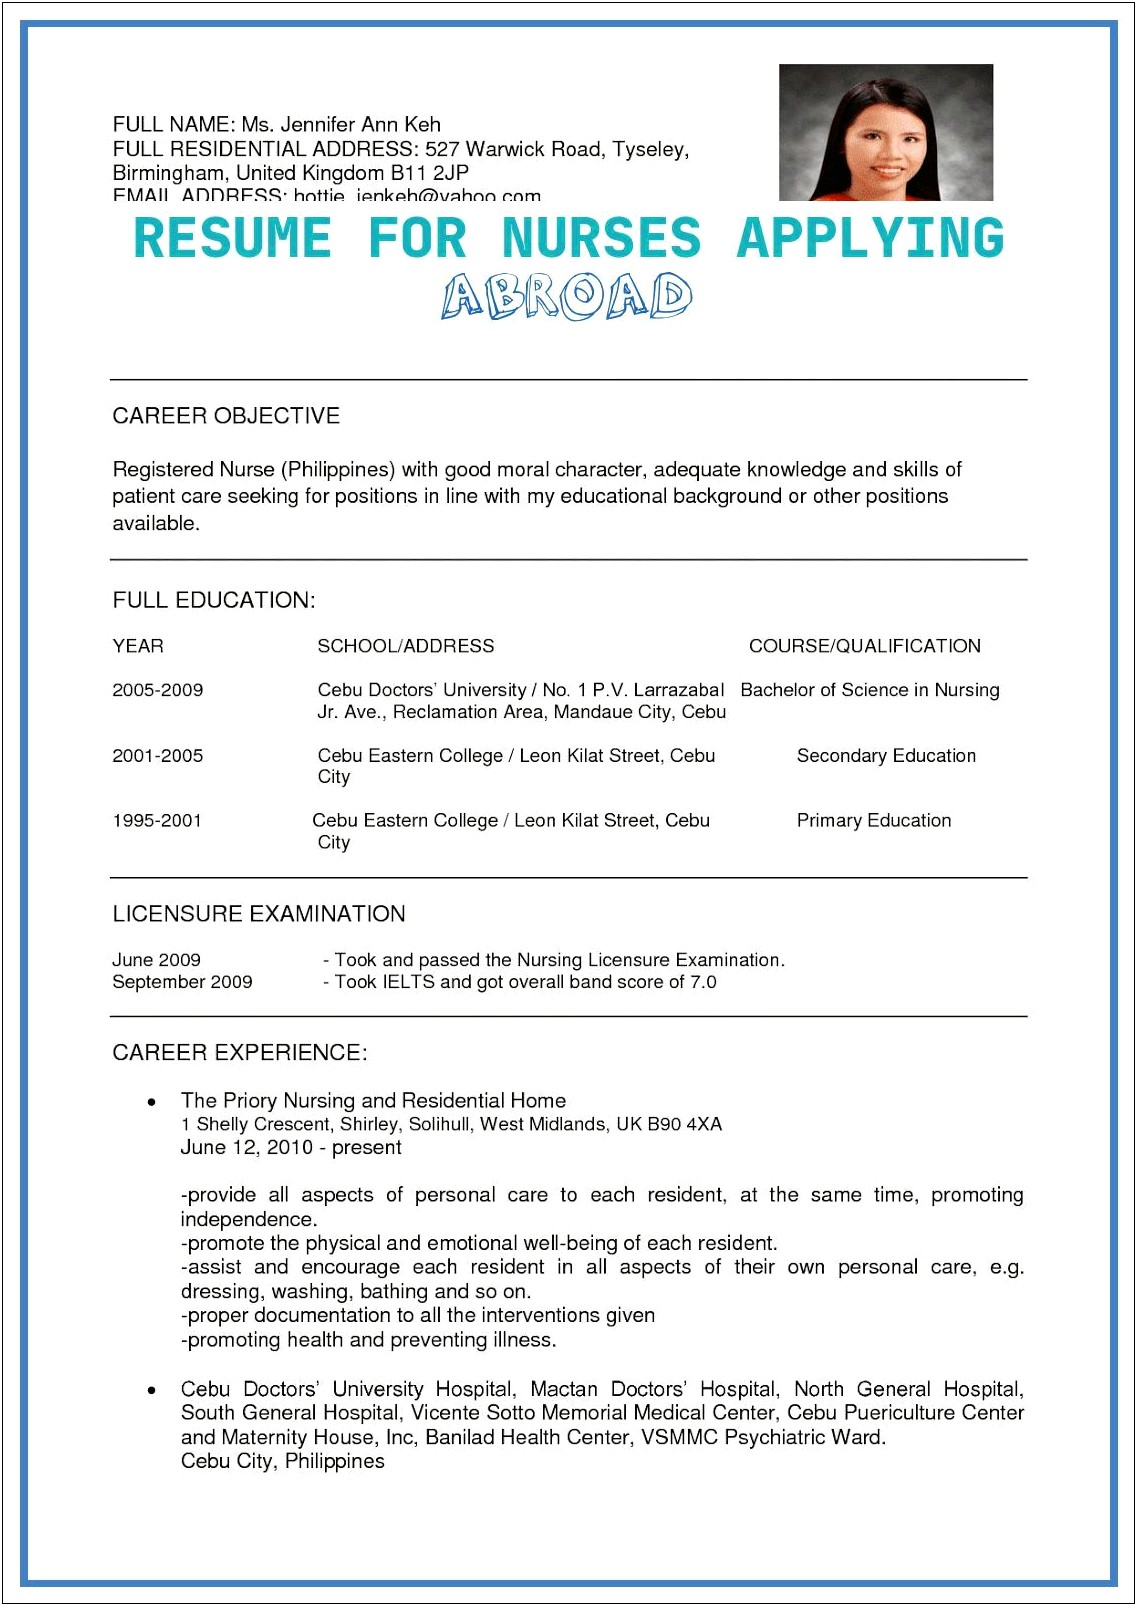 Sample Resume For International Nurses